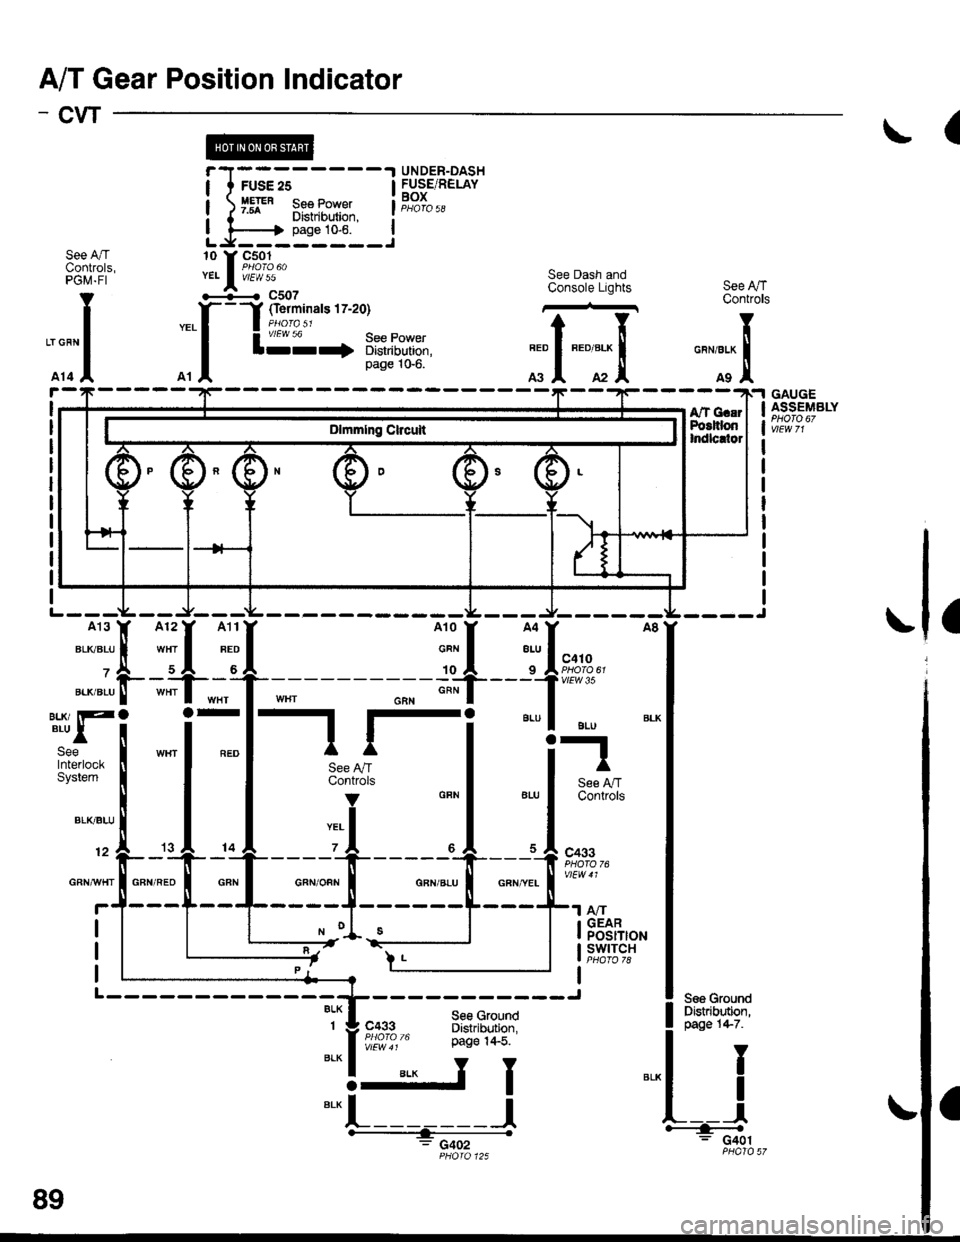 HONDA CIVIC 1998 6.G Manual PDF A/T Gear Position Indicator
{\
-cw
@UNDER-DASHFUSE/RELAYBOX
r
See A/TControls
"Ttr
See Dash andConsole Lights
-AYlltFED I FED/BLK I
tl
YEL
A1
SEE A,TTControls,PGM.FI
I
;l
A/T GcarPoiltlo{|Indlc{or
GAU